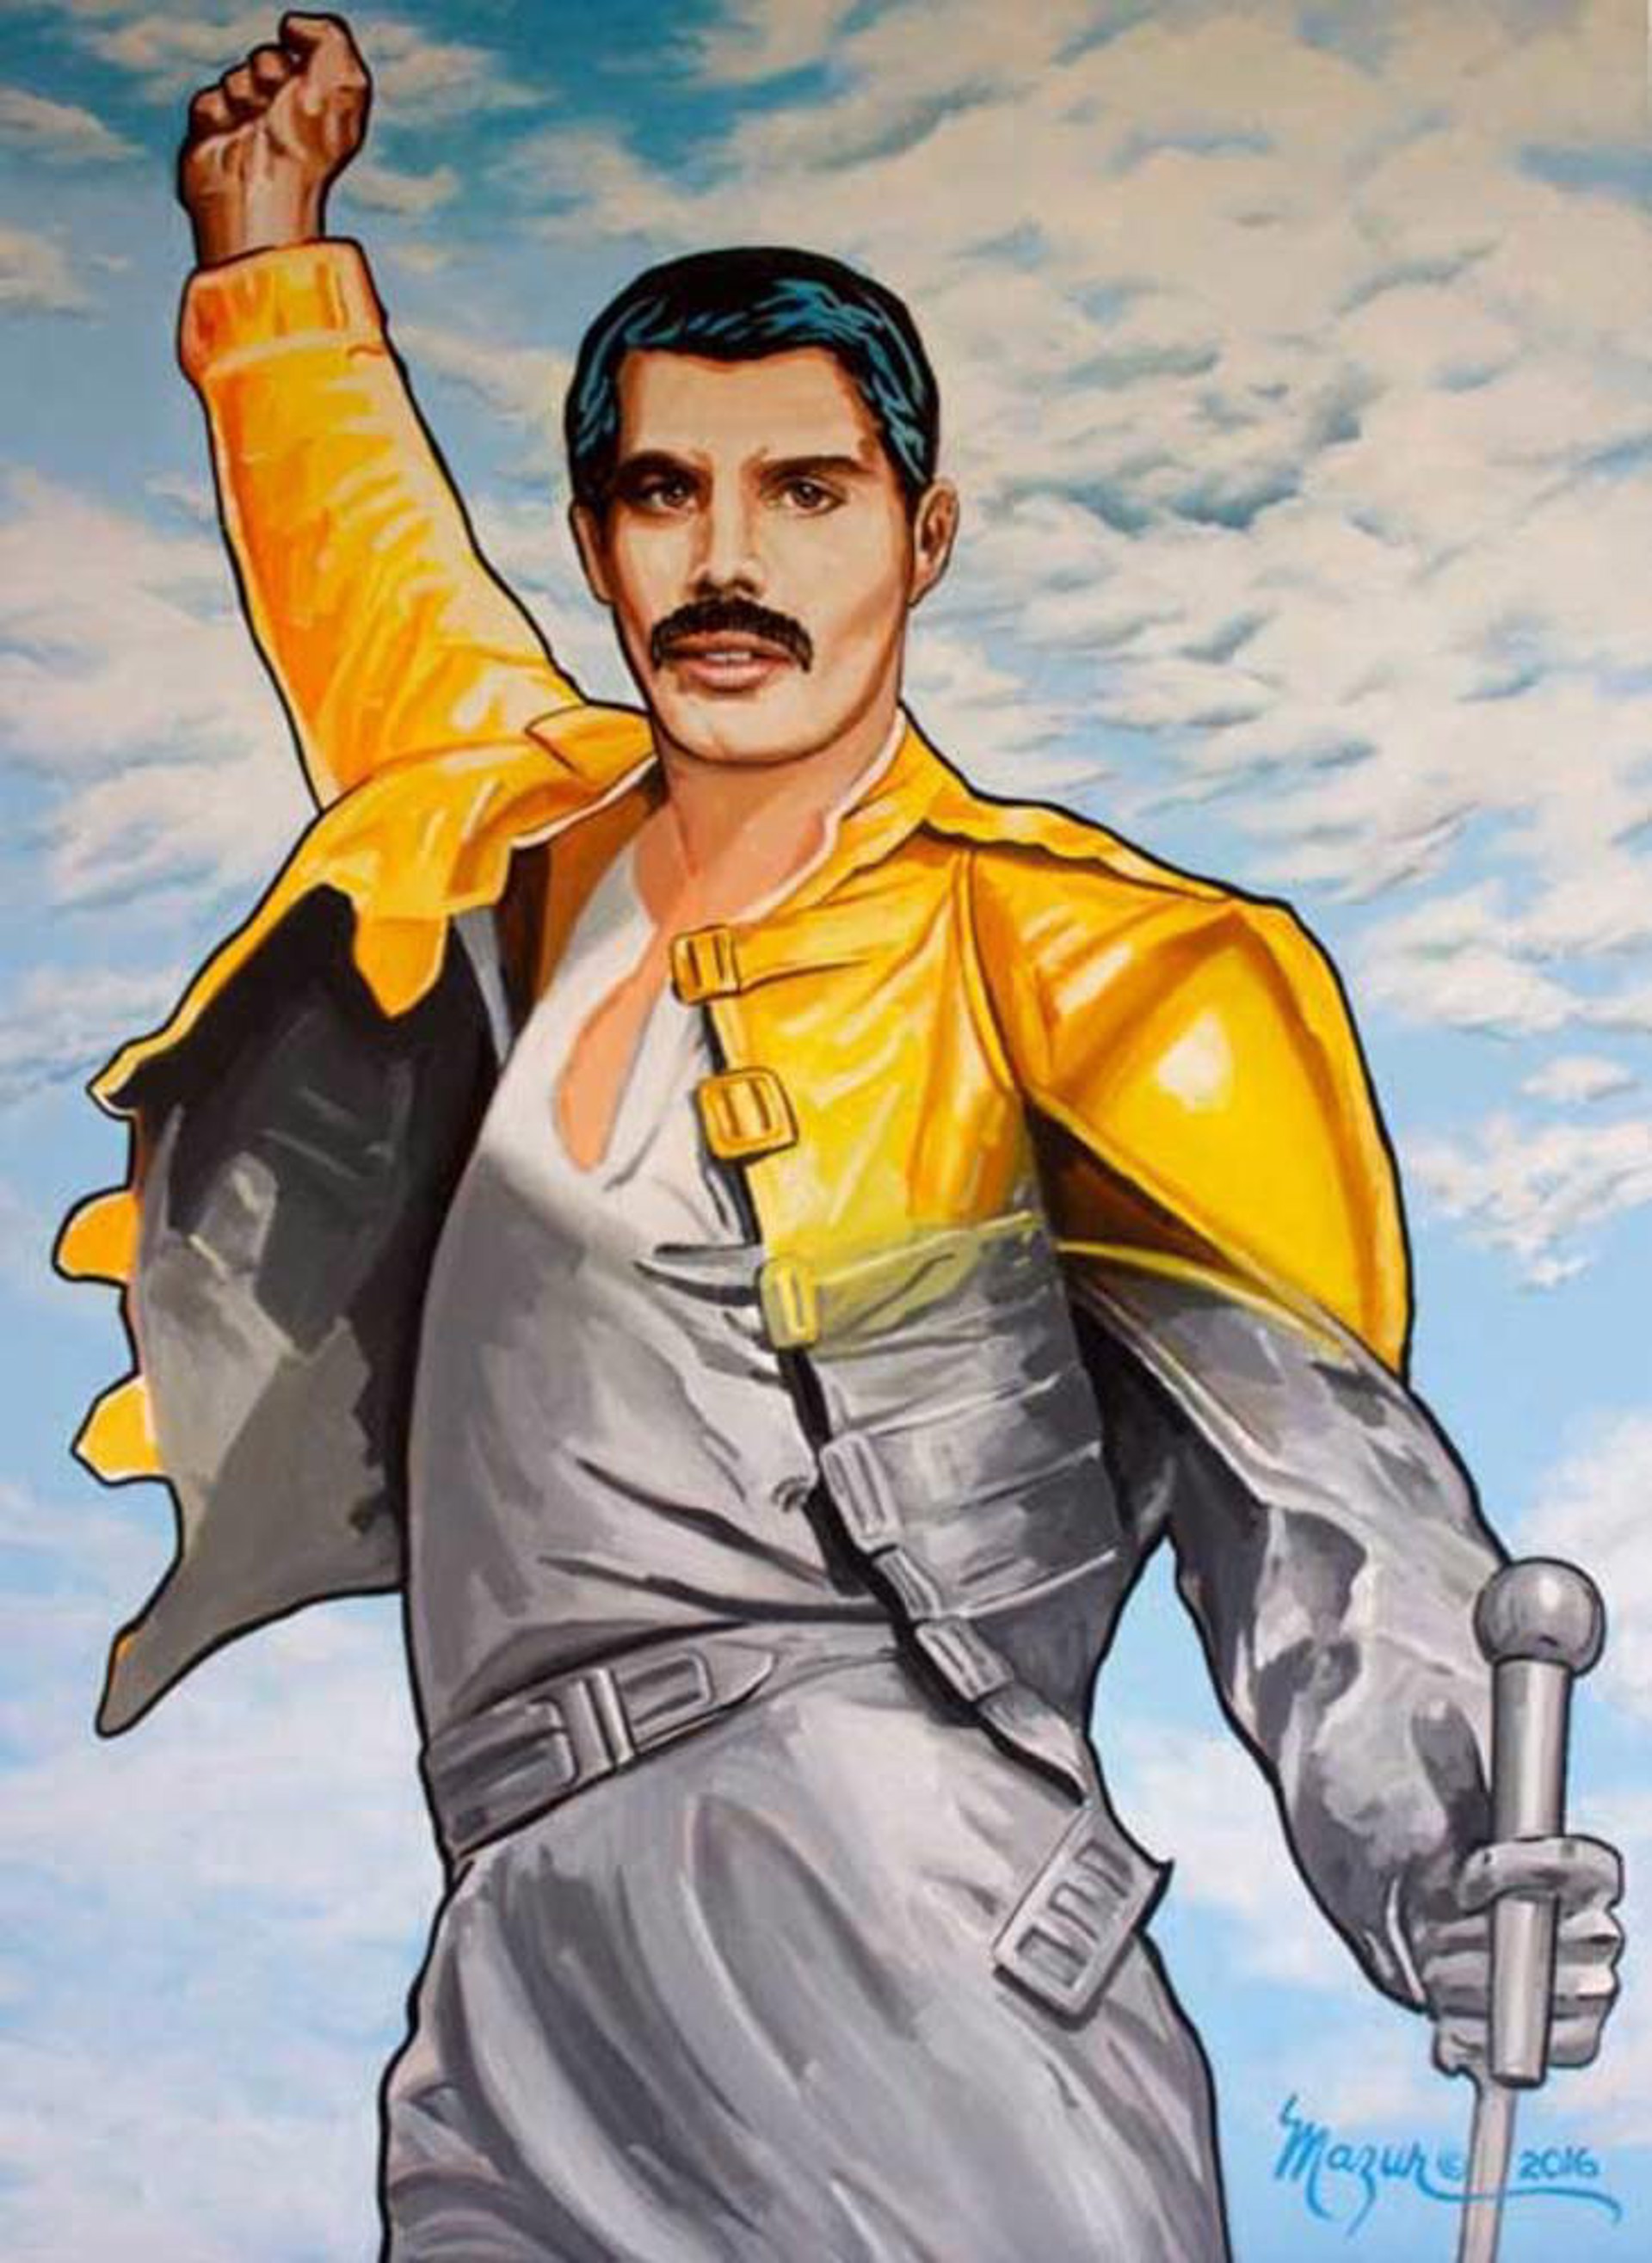 Freddie Mercury "A Monumental Queen" "A Monumental Queen" by Ruby Mazur